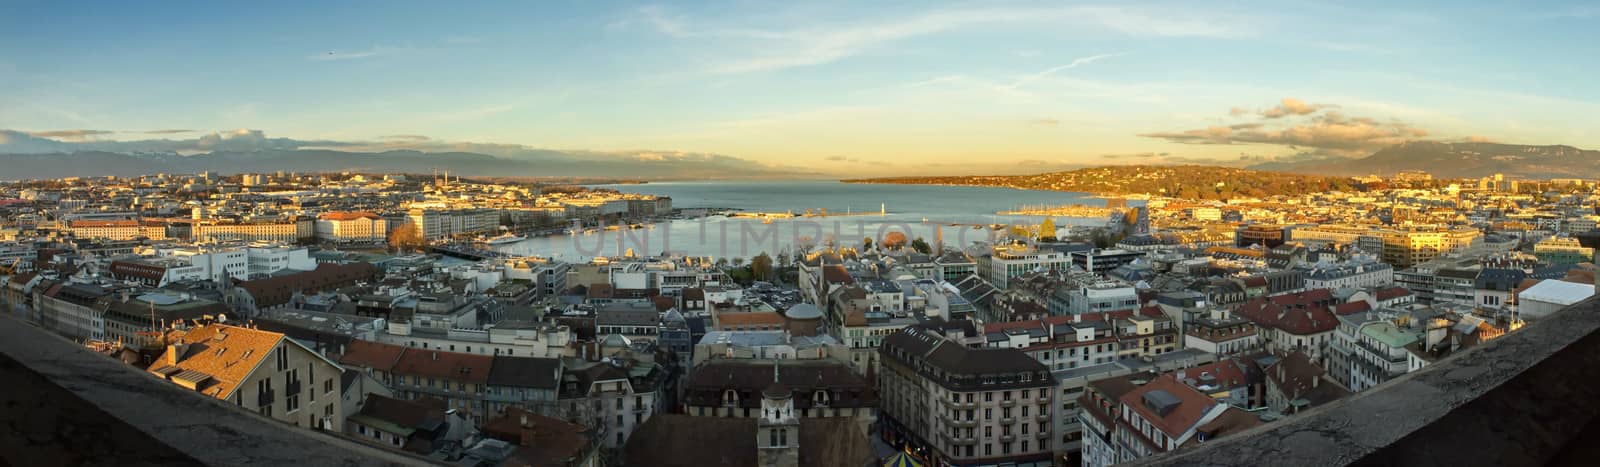 Geneva city and lake panorama, Switzerland by Elenaphotos21